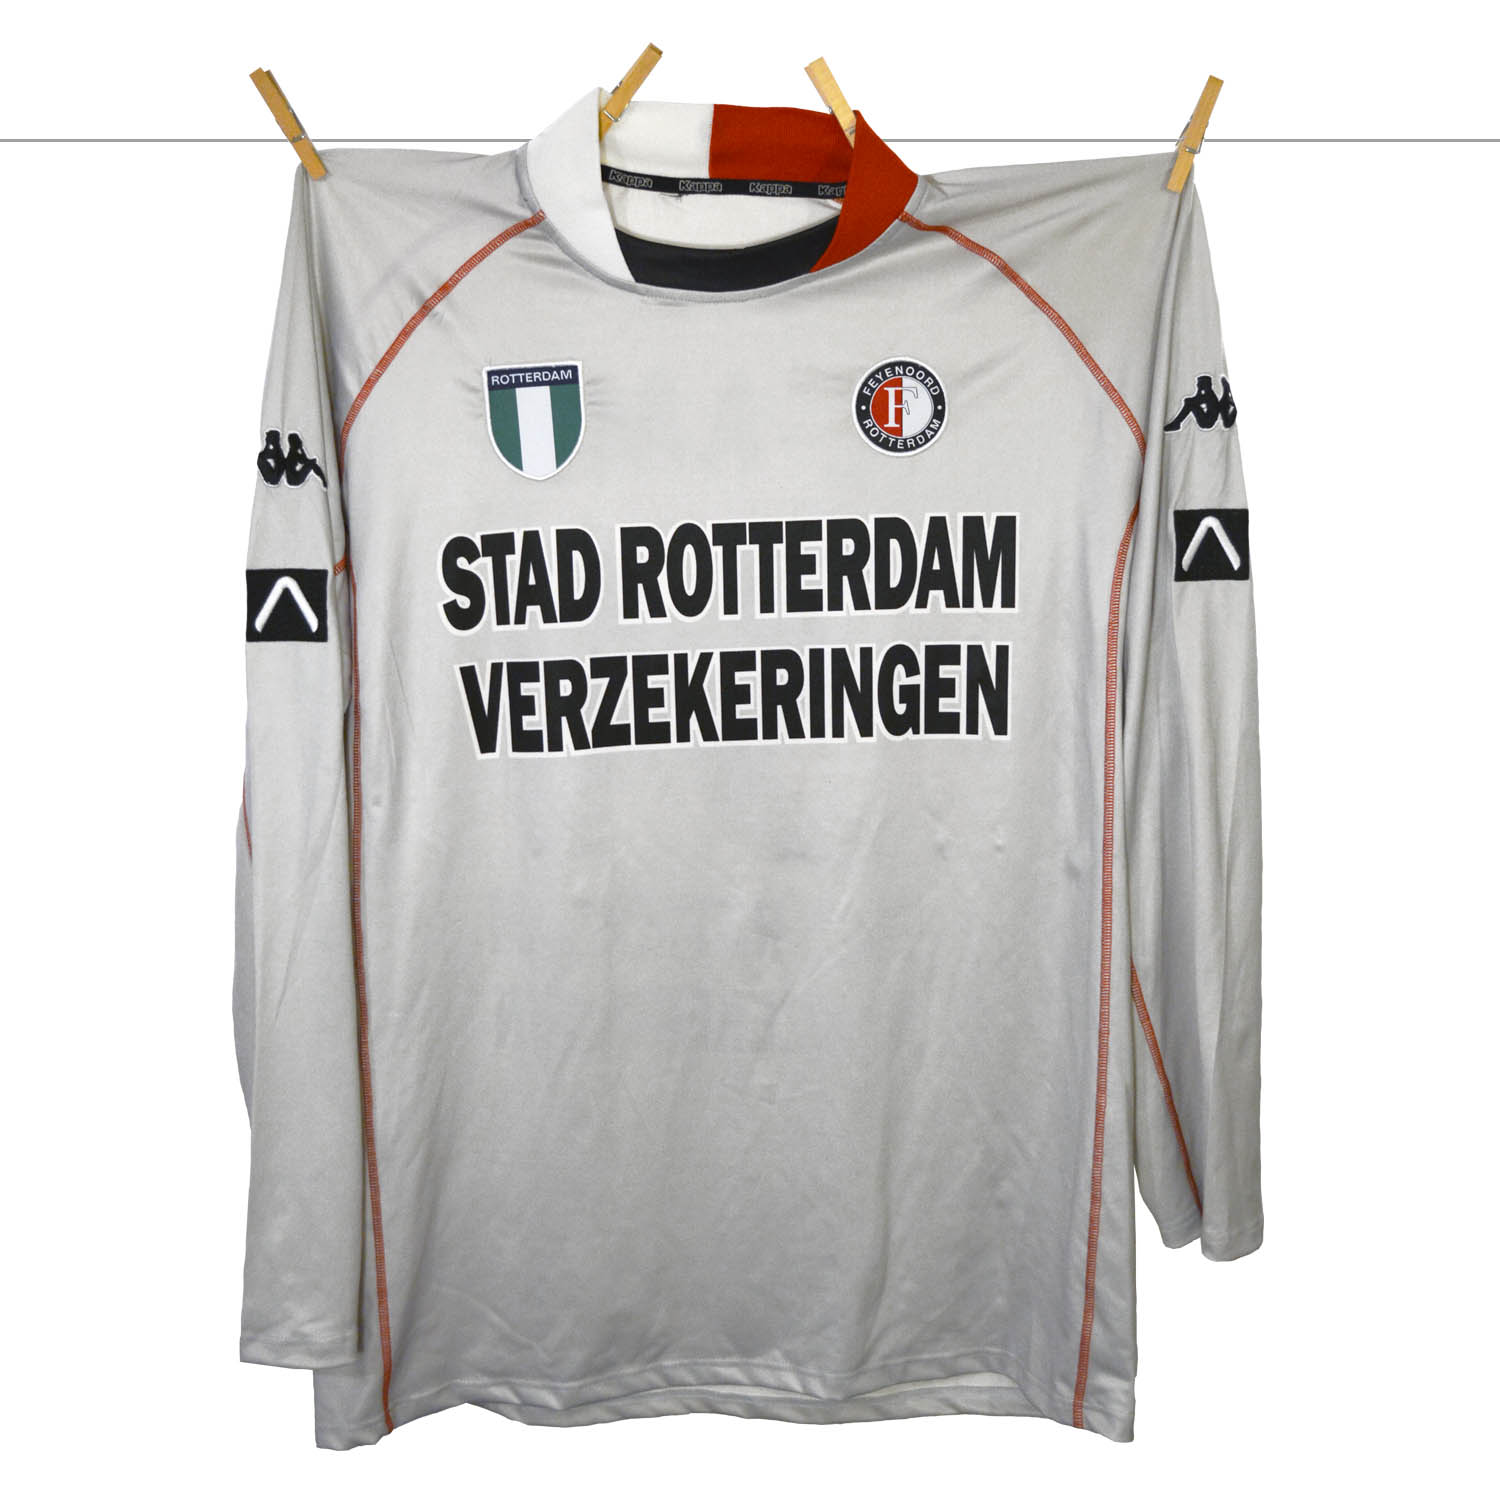 Kappa, Matchworn Feyenoord Keepersshirt 2002 - 2003, Carlo L'Ami